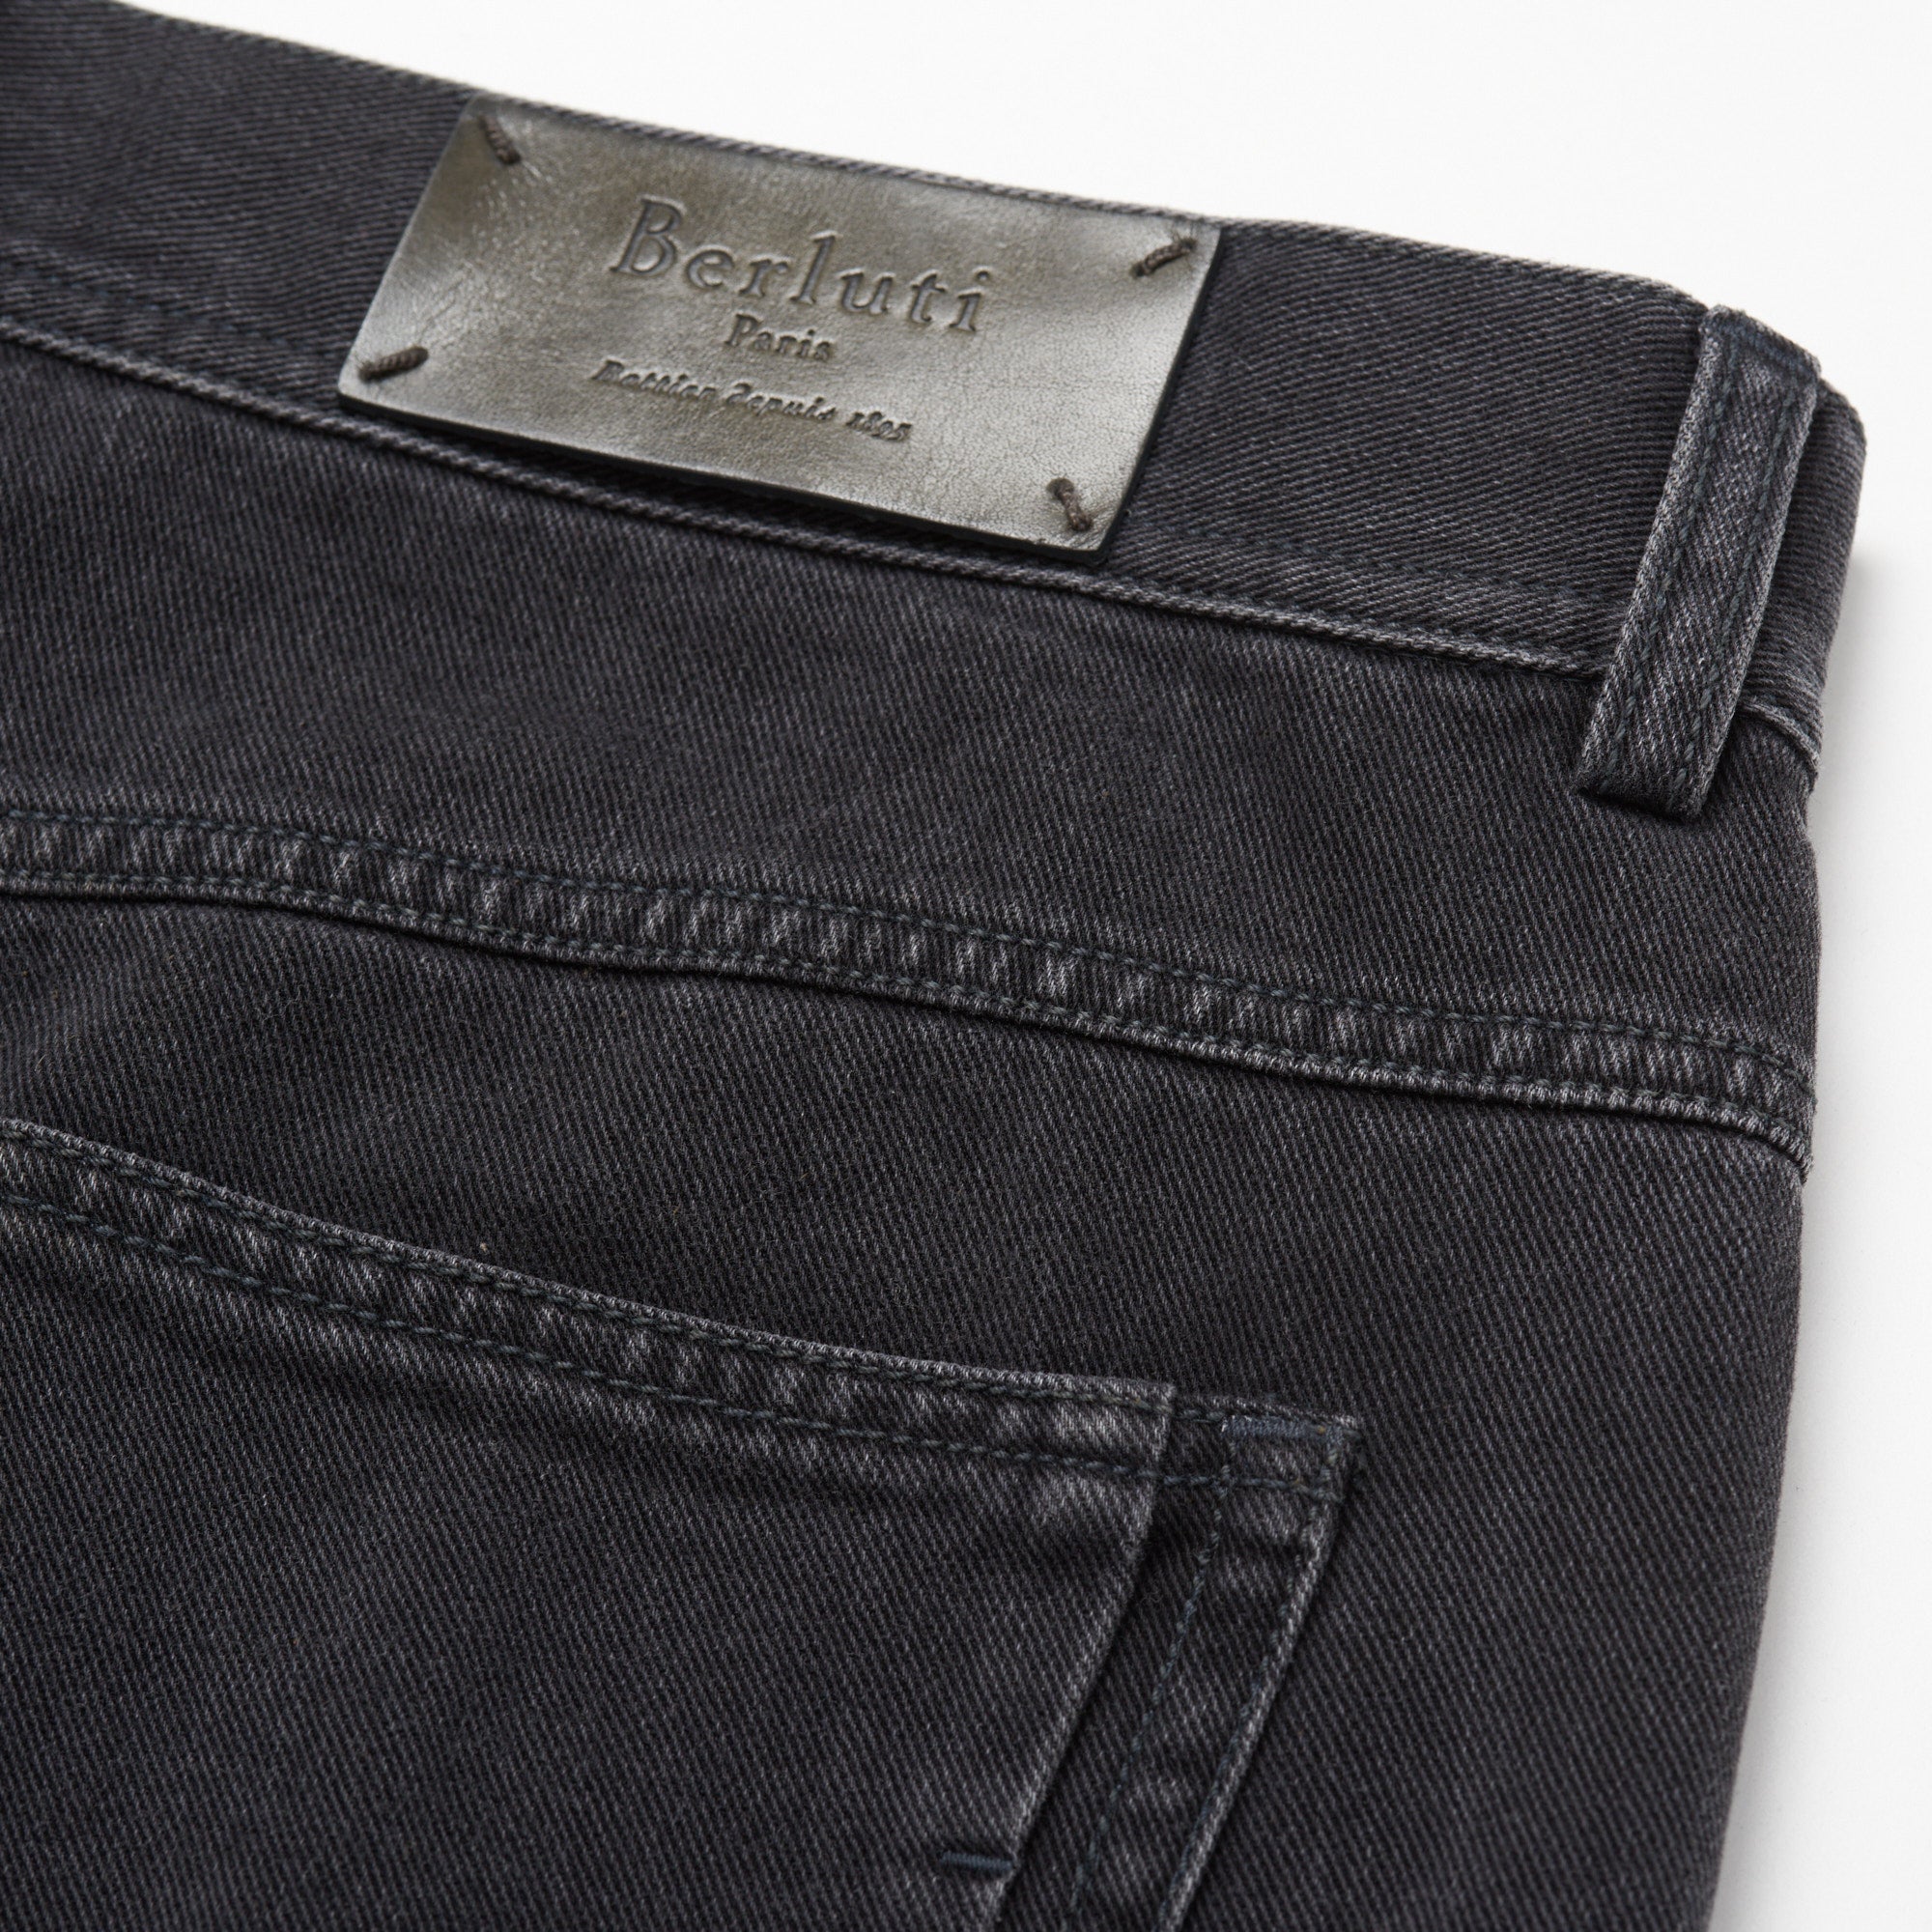 BERLUTI Paris Black Denim Narrow Slim Fit Jeans Pants EU 52 US 36